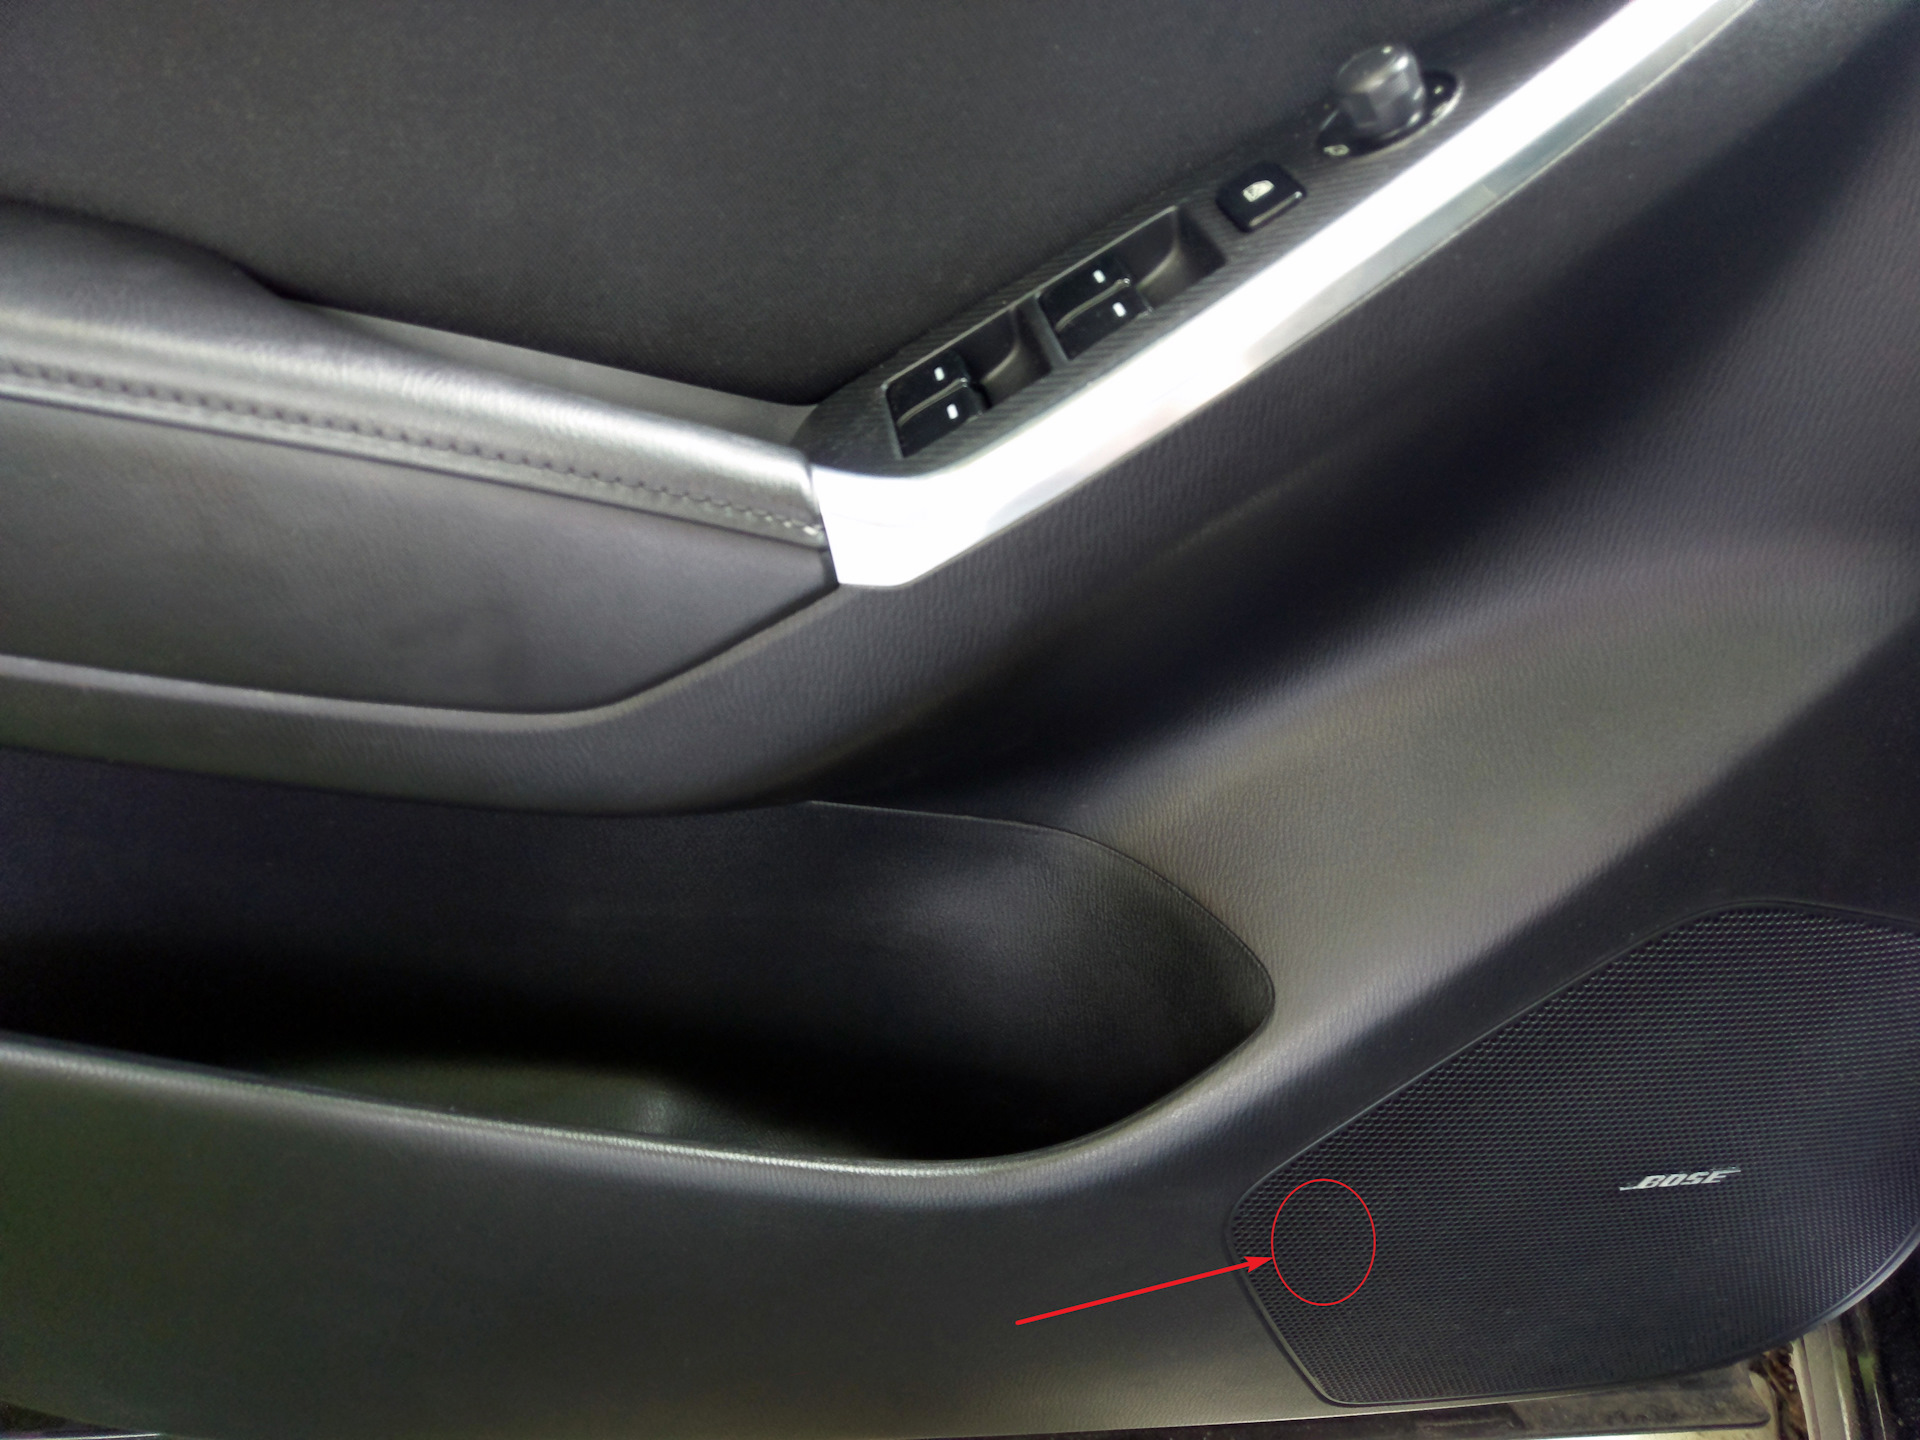 Складывание зеркал мазда сх 5. Мазда СХ 5 складывание зеркал. Mazda CX-5 складывание зеркал. Кнопка складывания зеркал Мазда сх5. Кнопка складывания зеркал Мазда сх5 2014.